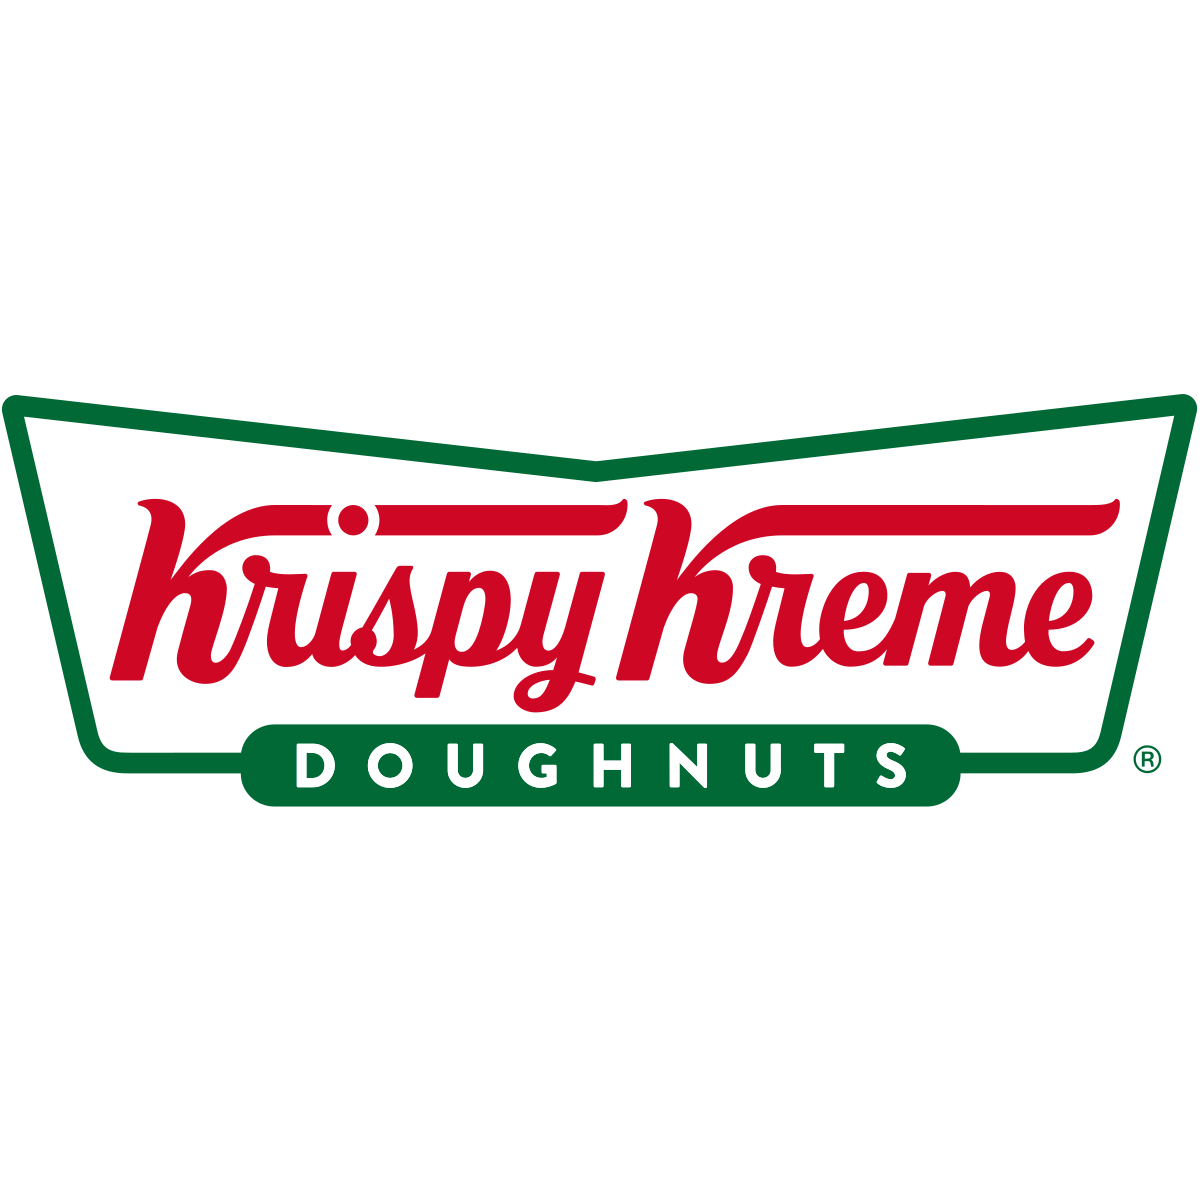 Krispy Kreme Cribbs Causeway - Bristol, Gloucestershire BS34 5DG - 01276 601170 | ShowMeLocal.com